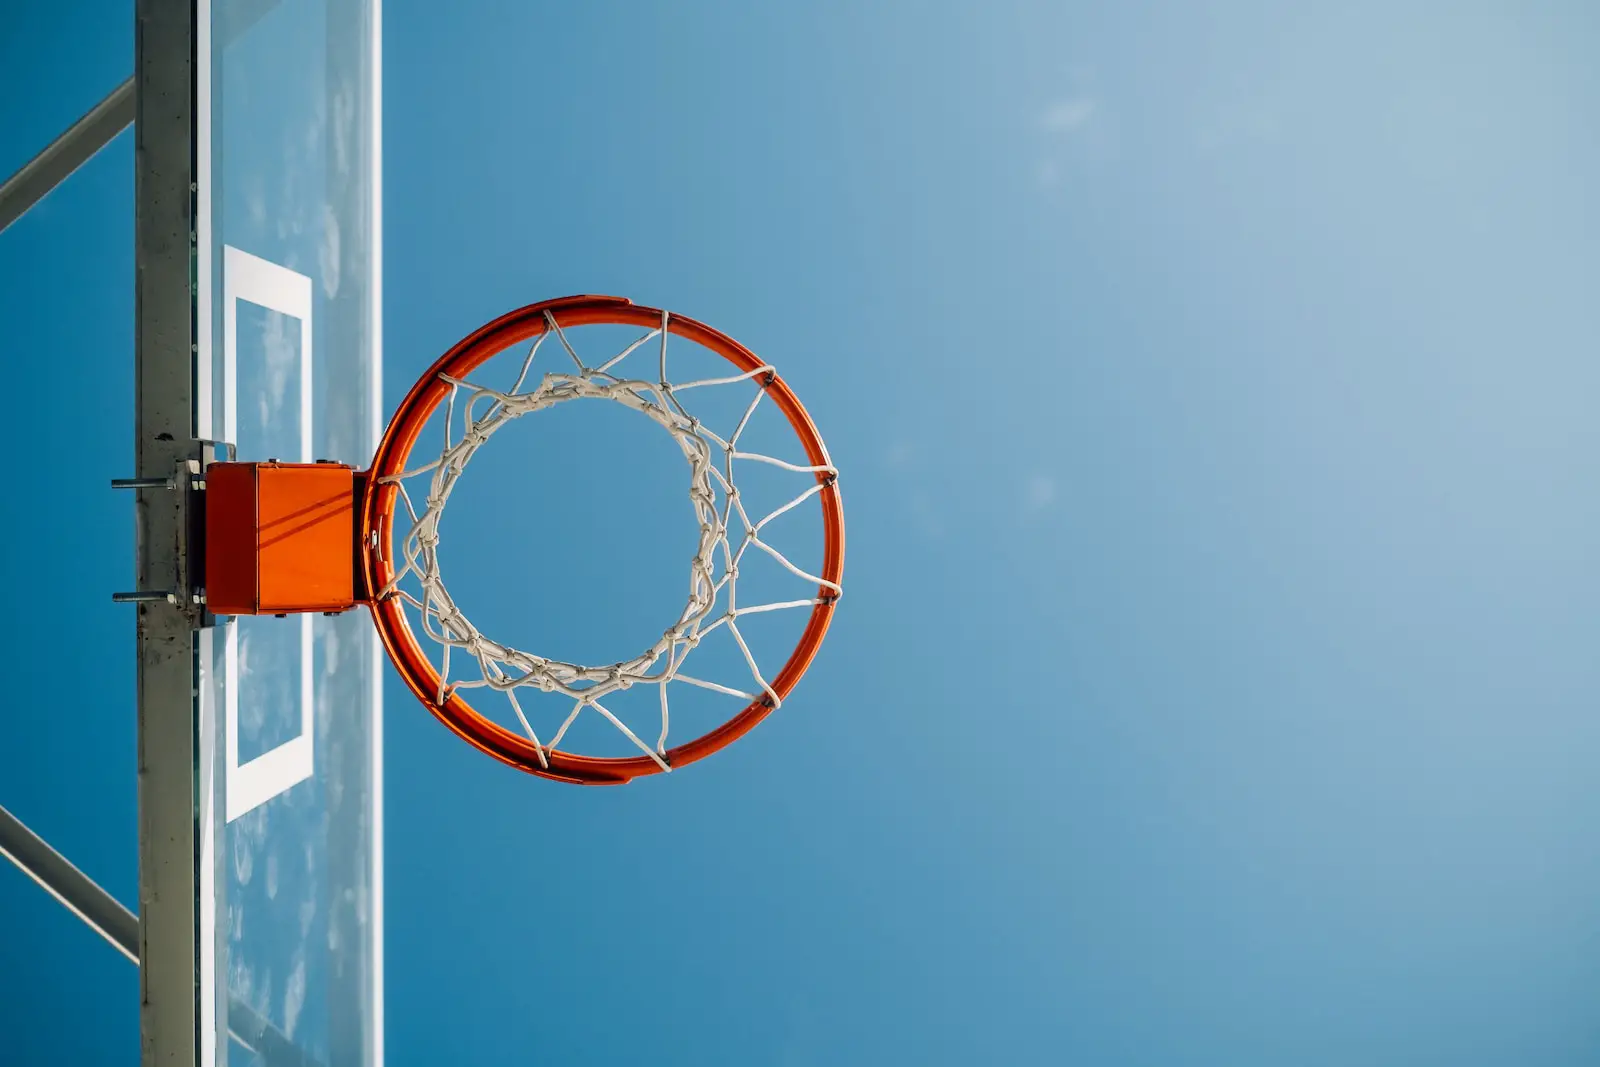 white and orange basketball hoop under blue sky during daytime